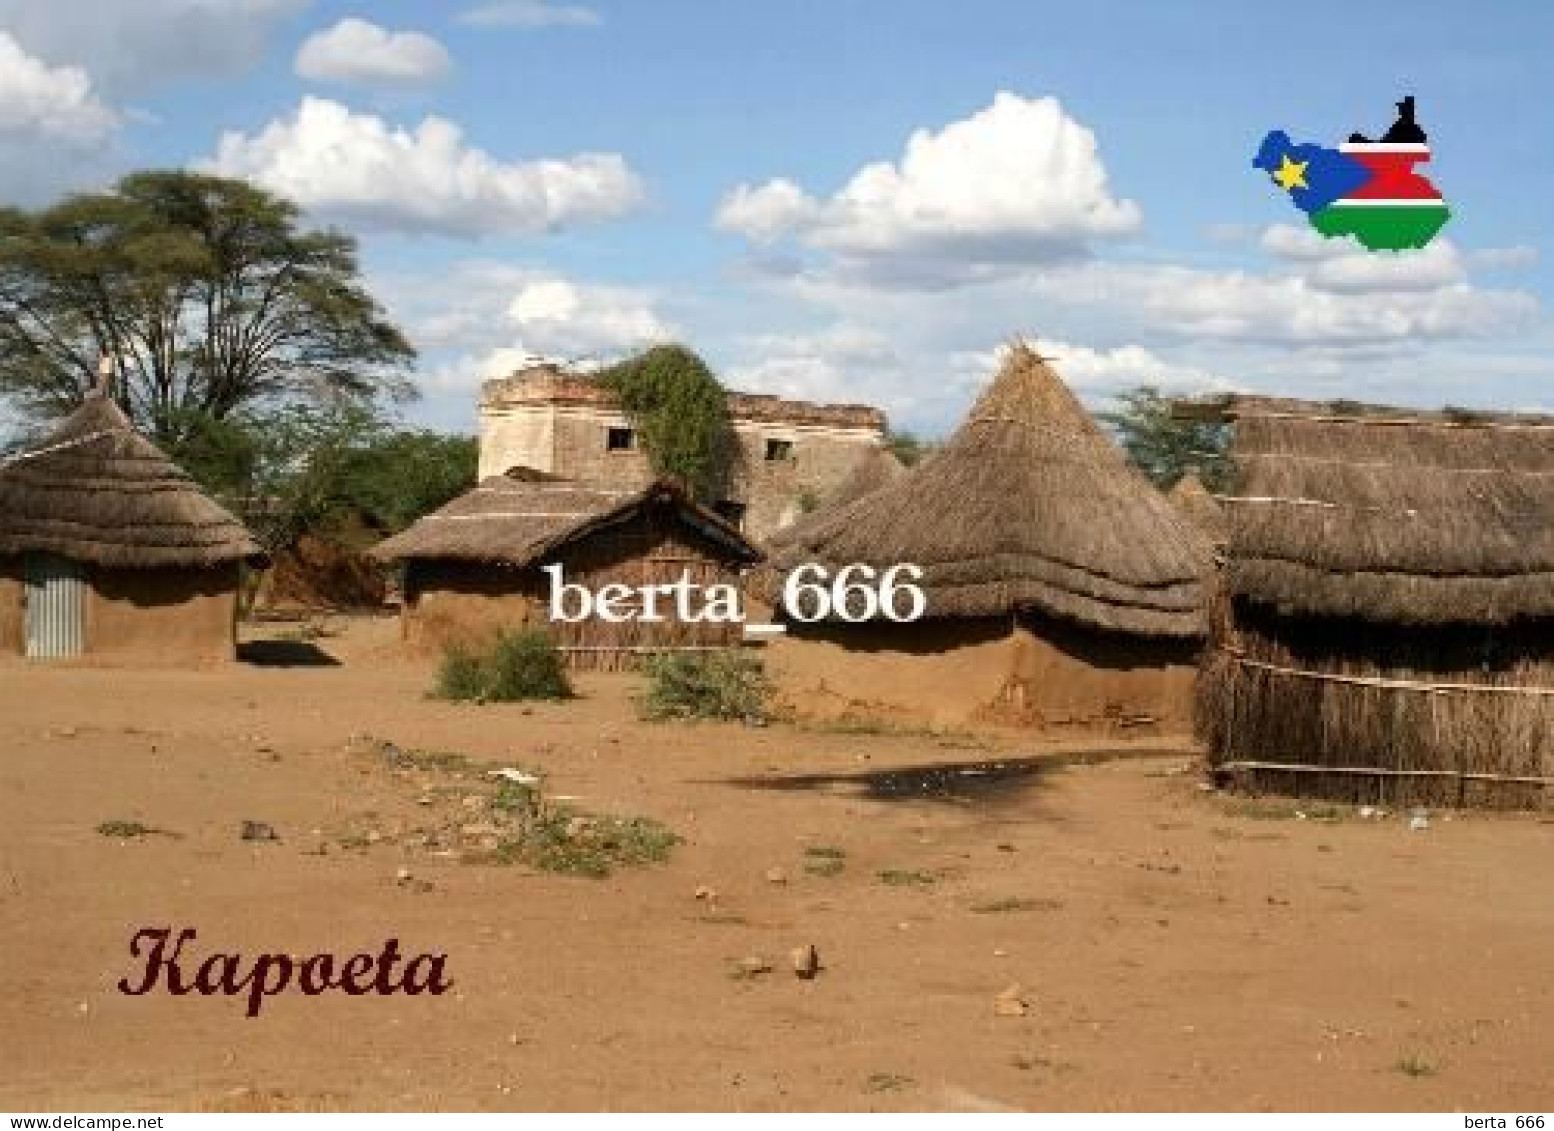 South Sudan Kapoeta Huts New Postcard - Soudan